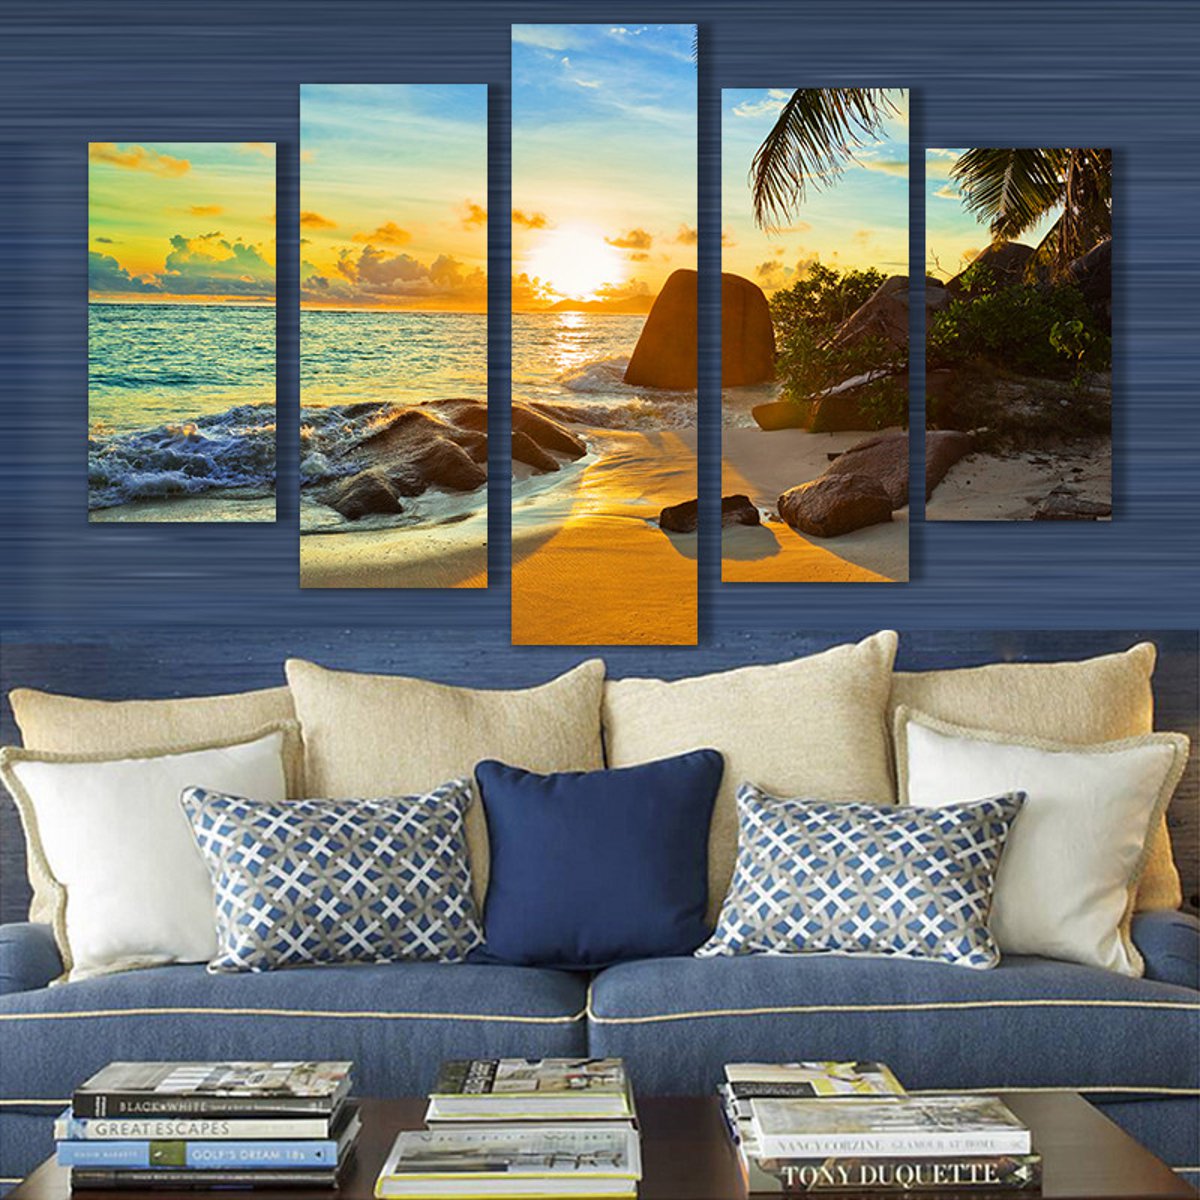 5Pcs-Sea-Coastal-Canvas-Print-Paintings-Wall-Decorative-Print-Art-Pictures-Frameless-Wall-Hanging-De-1742334-6